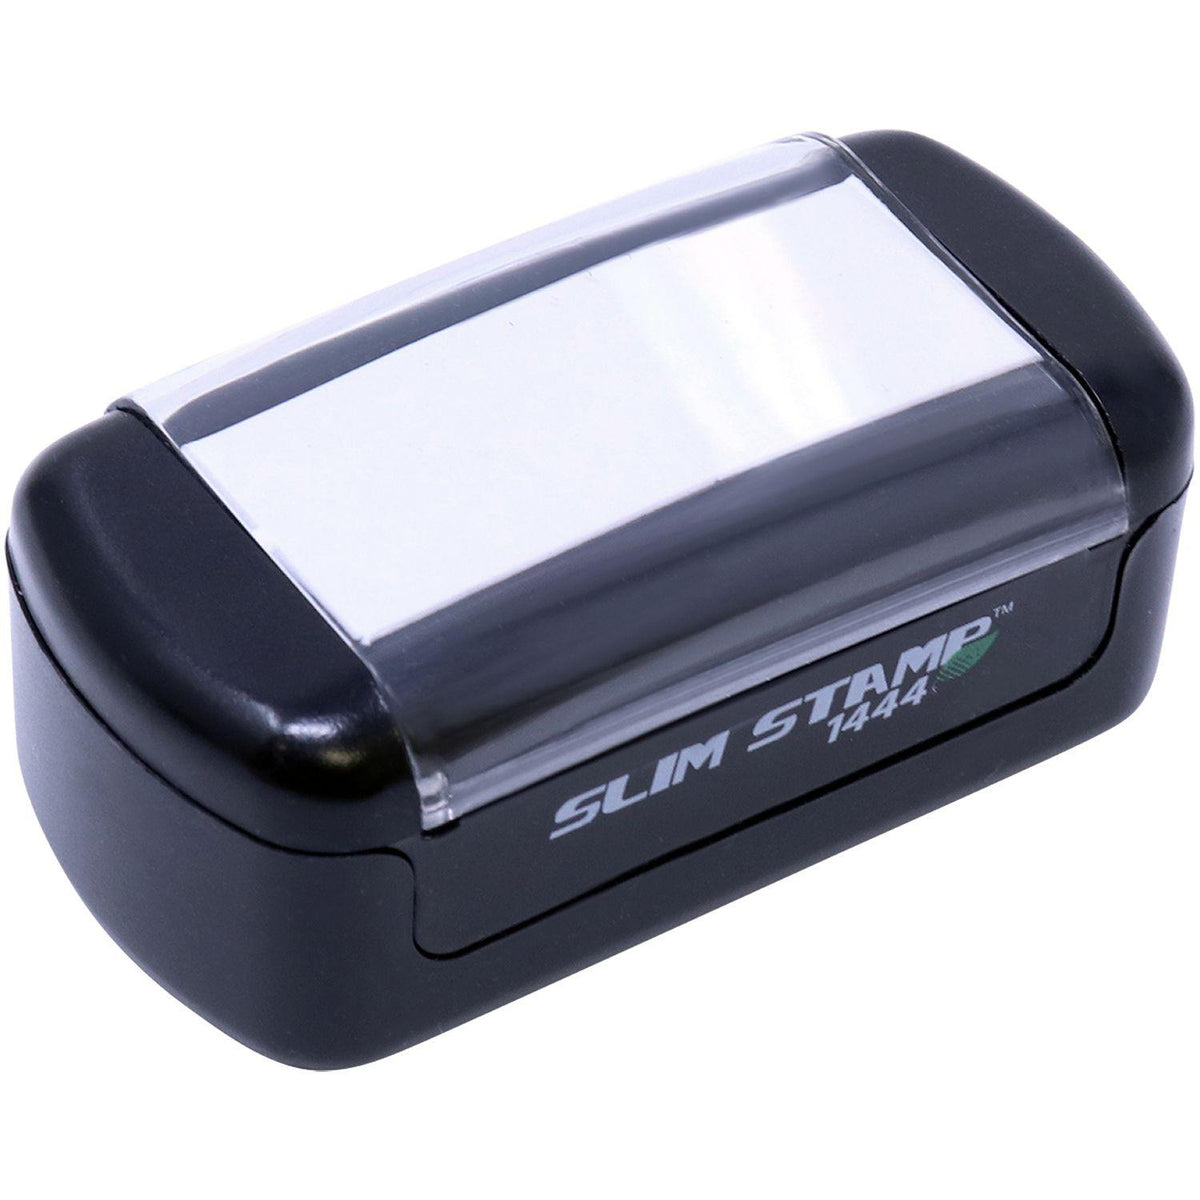 Slim Pre-Inked Avis De Receiption Stamp - Engineer Seal Stamps - Brand_Slim, Impression Size_Small, Stamp Type_Pre-Inked Stamp, Type of Use_Office